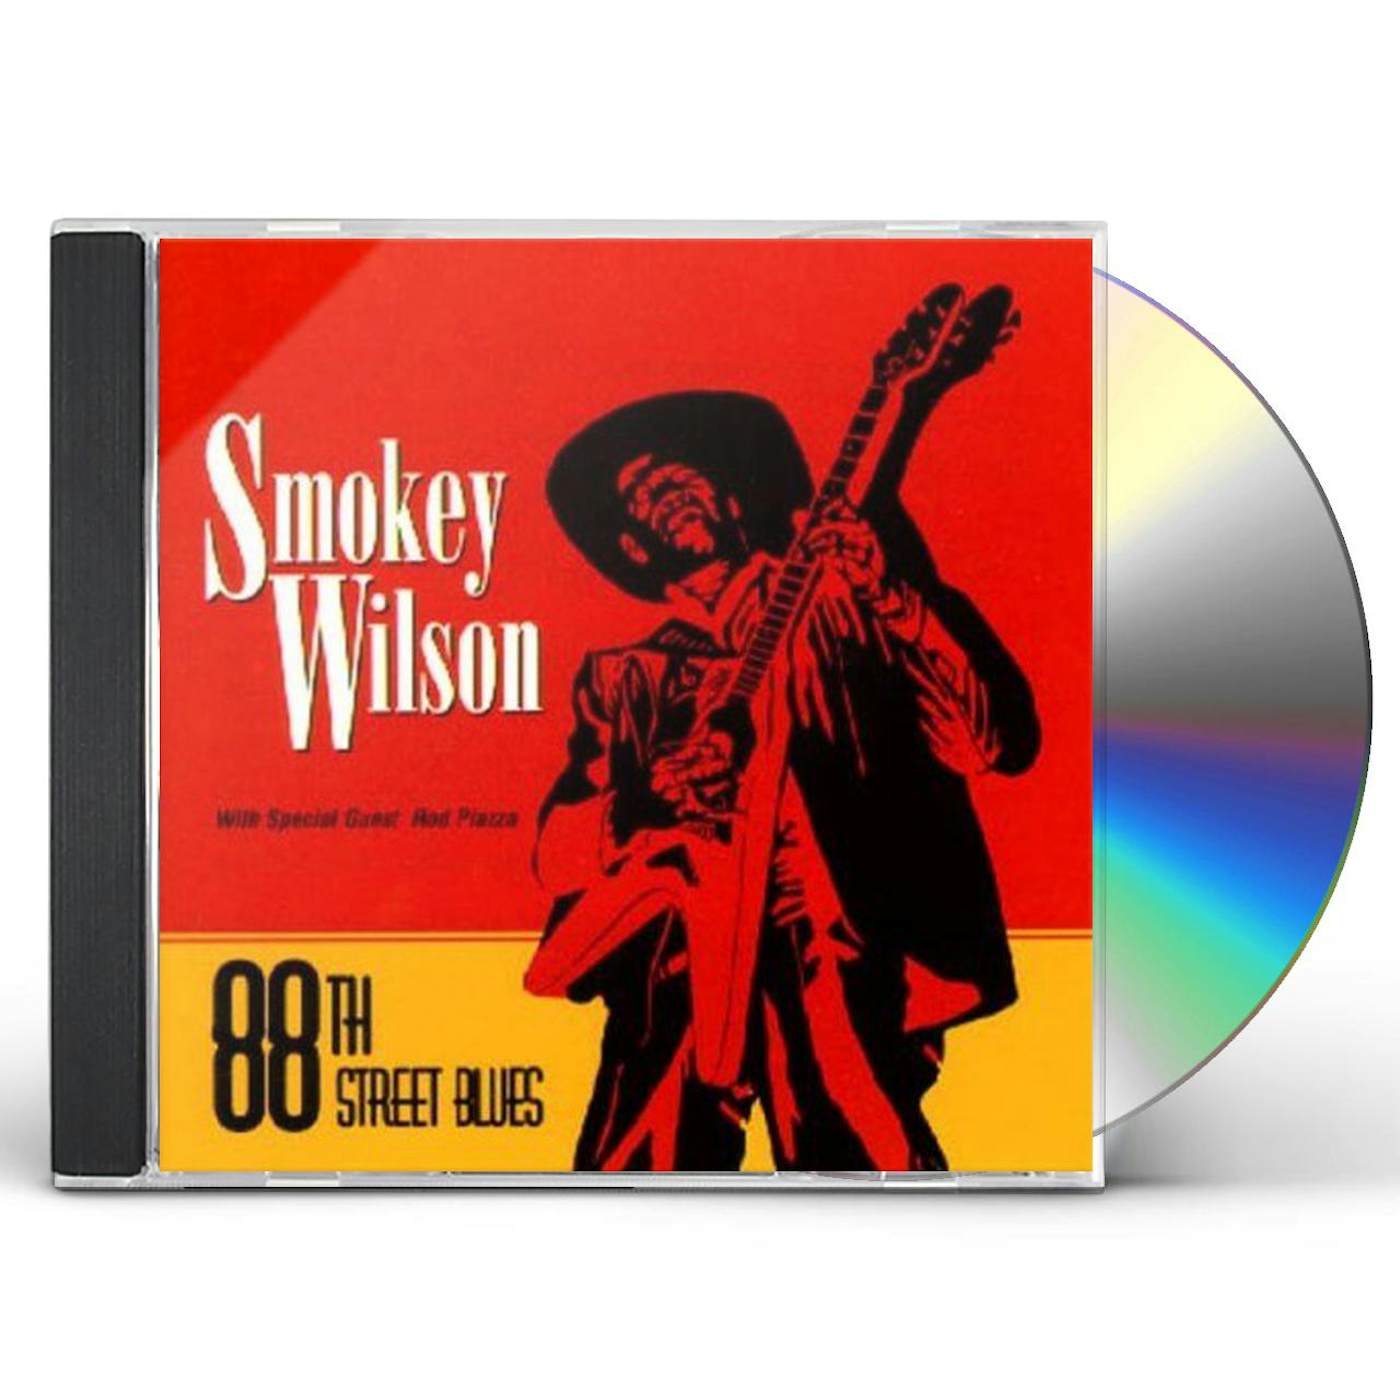 Smokey Wilson 88TH STREET BLUES CD